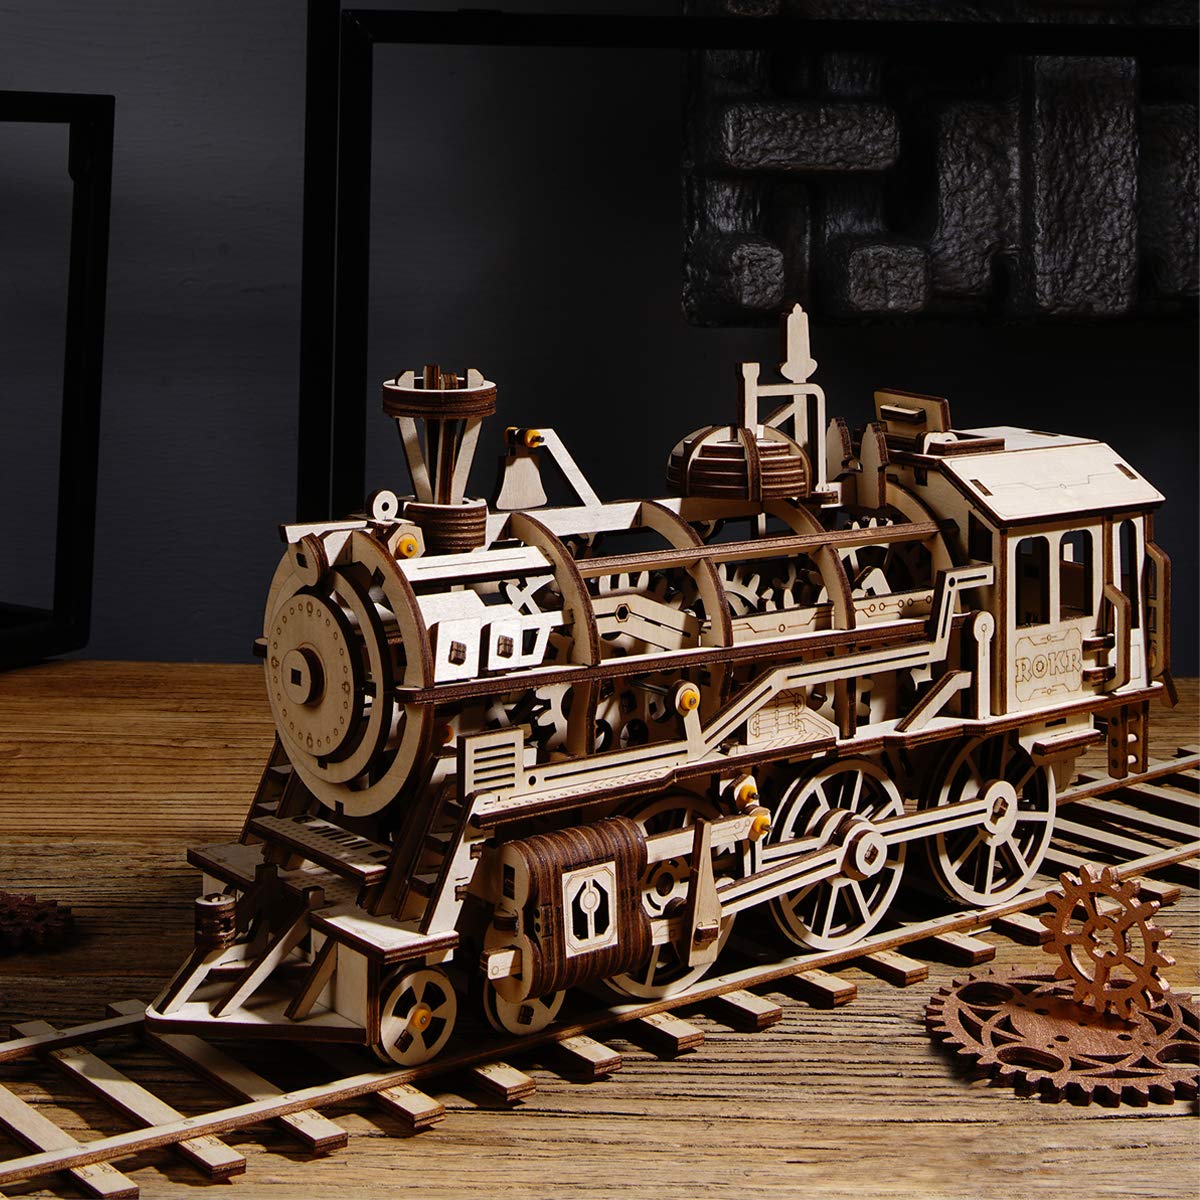 3D-Assembly-Wooden-Puzzle-Locomotive-Movement-Train-Kit-Mechanical-Gears-Brain-Teaser-Model-Building-1344106